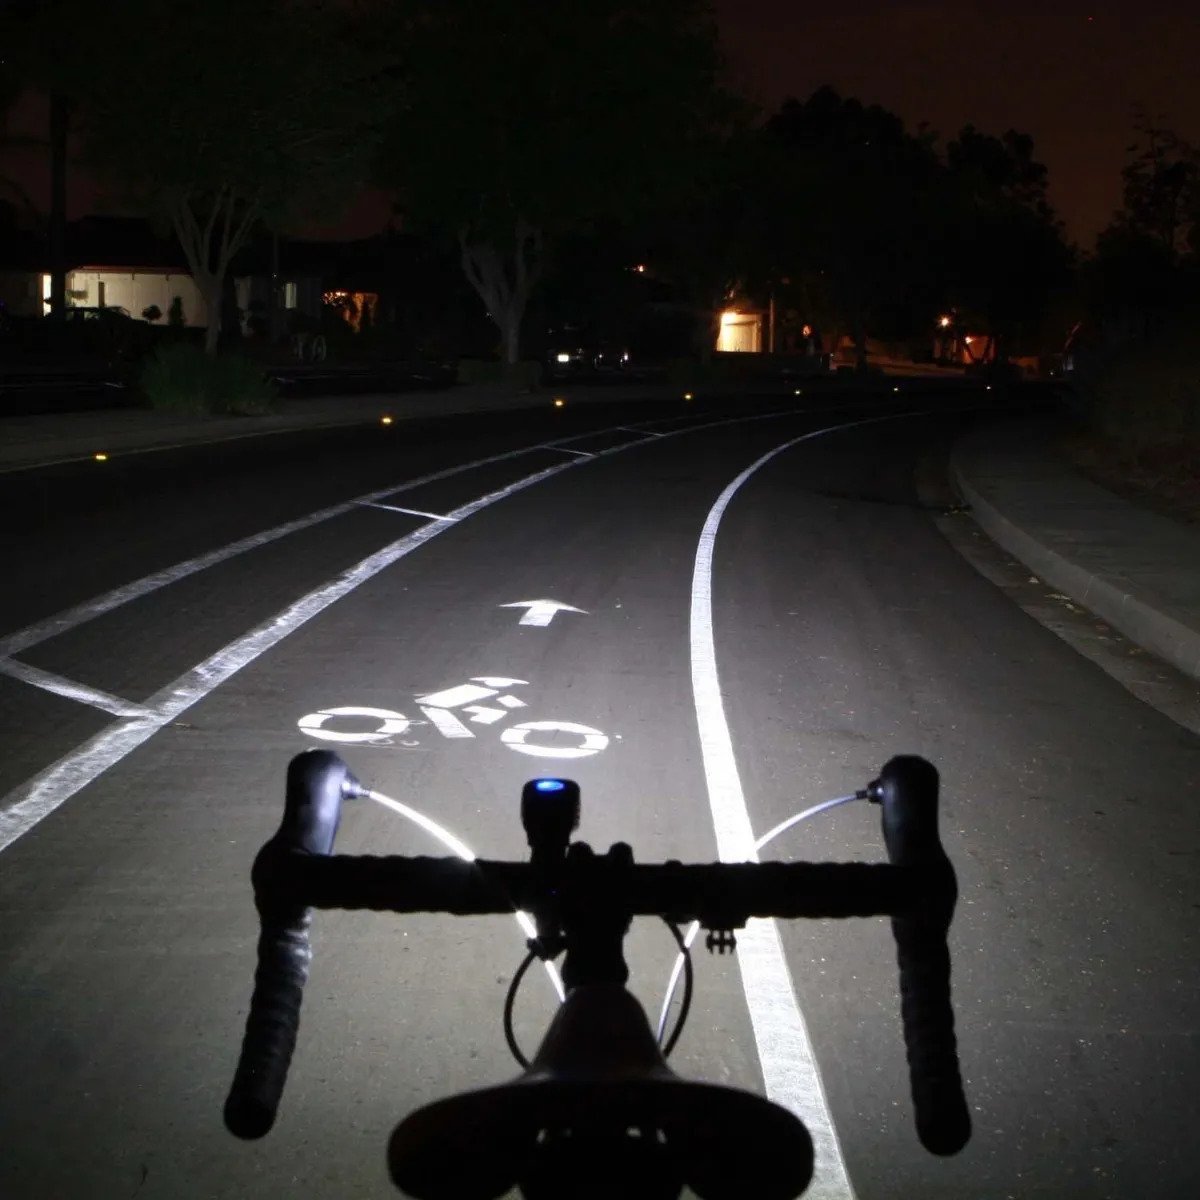 Luz de Bicicleta Frontal - Nite Rider Lumina micro 900